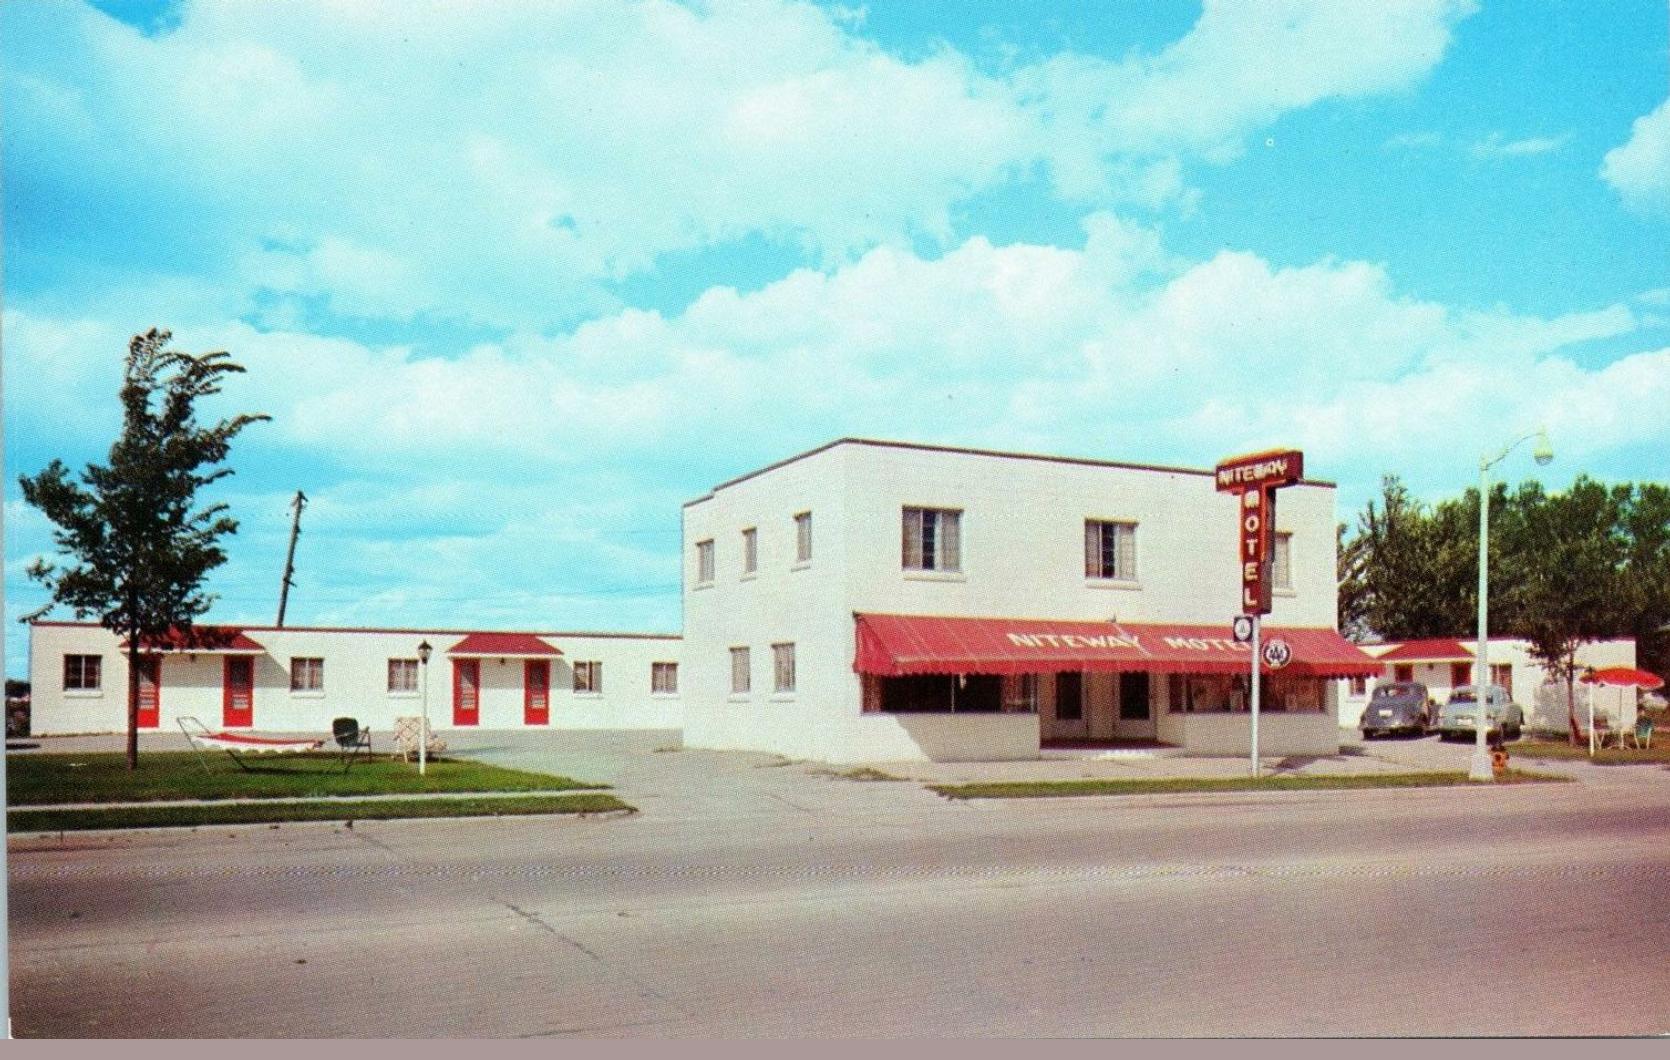 Niteway Motel • 1954